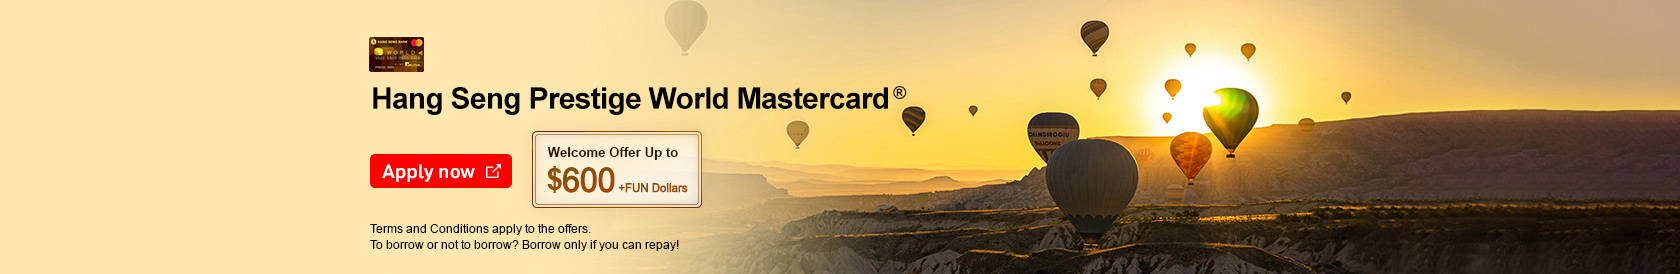 Apply now, Hang Seng Prestige World Mastercard®, welcome offer up to $800 Cash Dollars